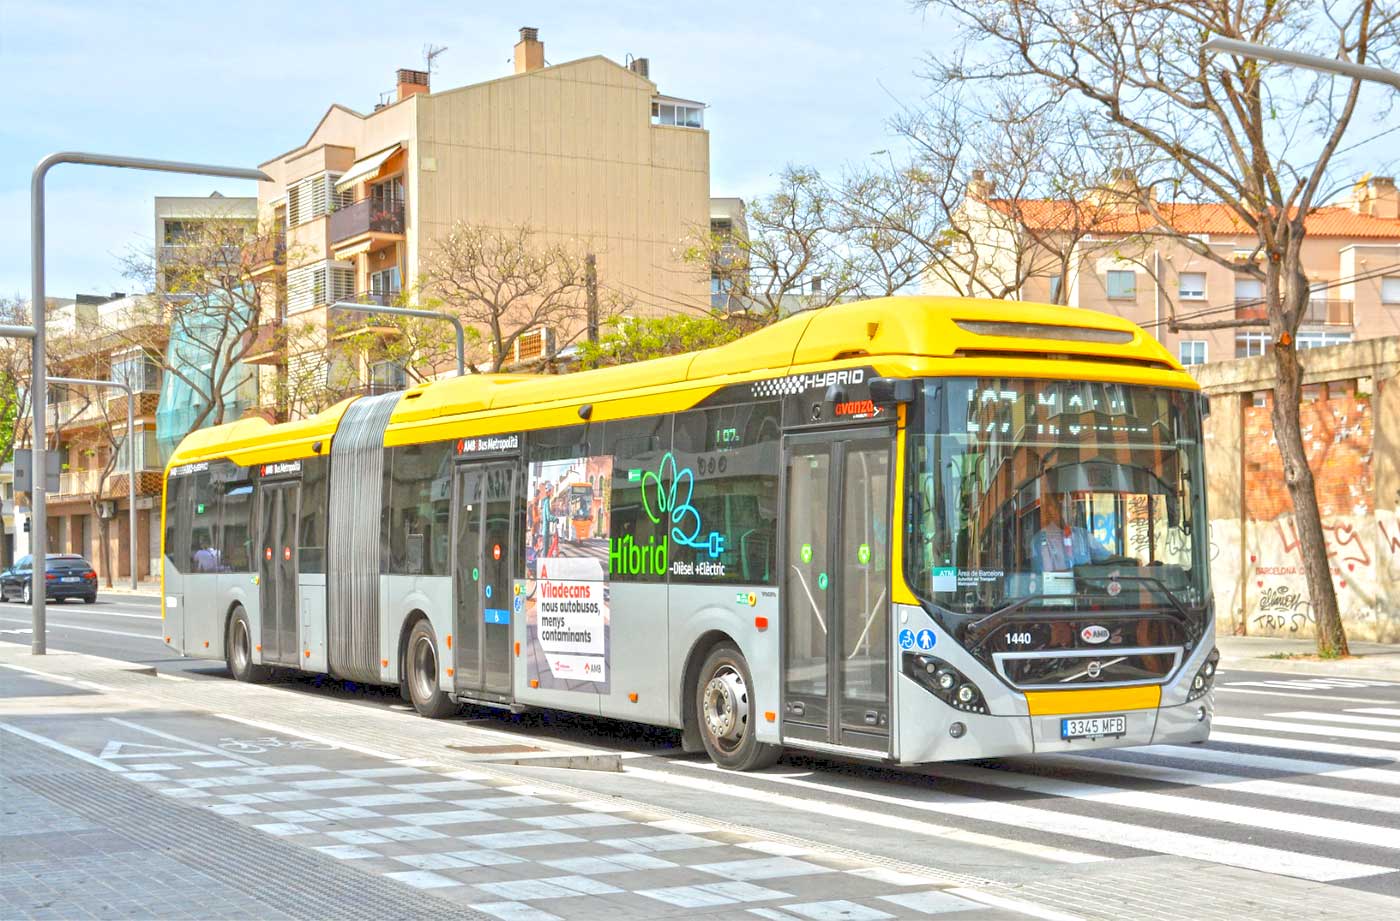 Barcelona Public Transport - Bus